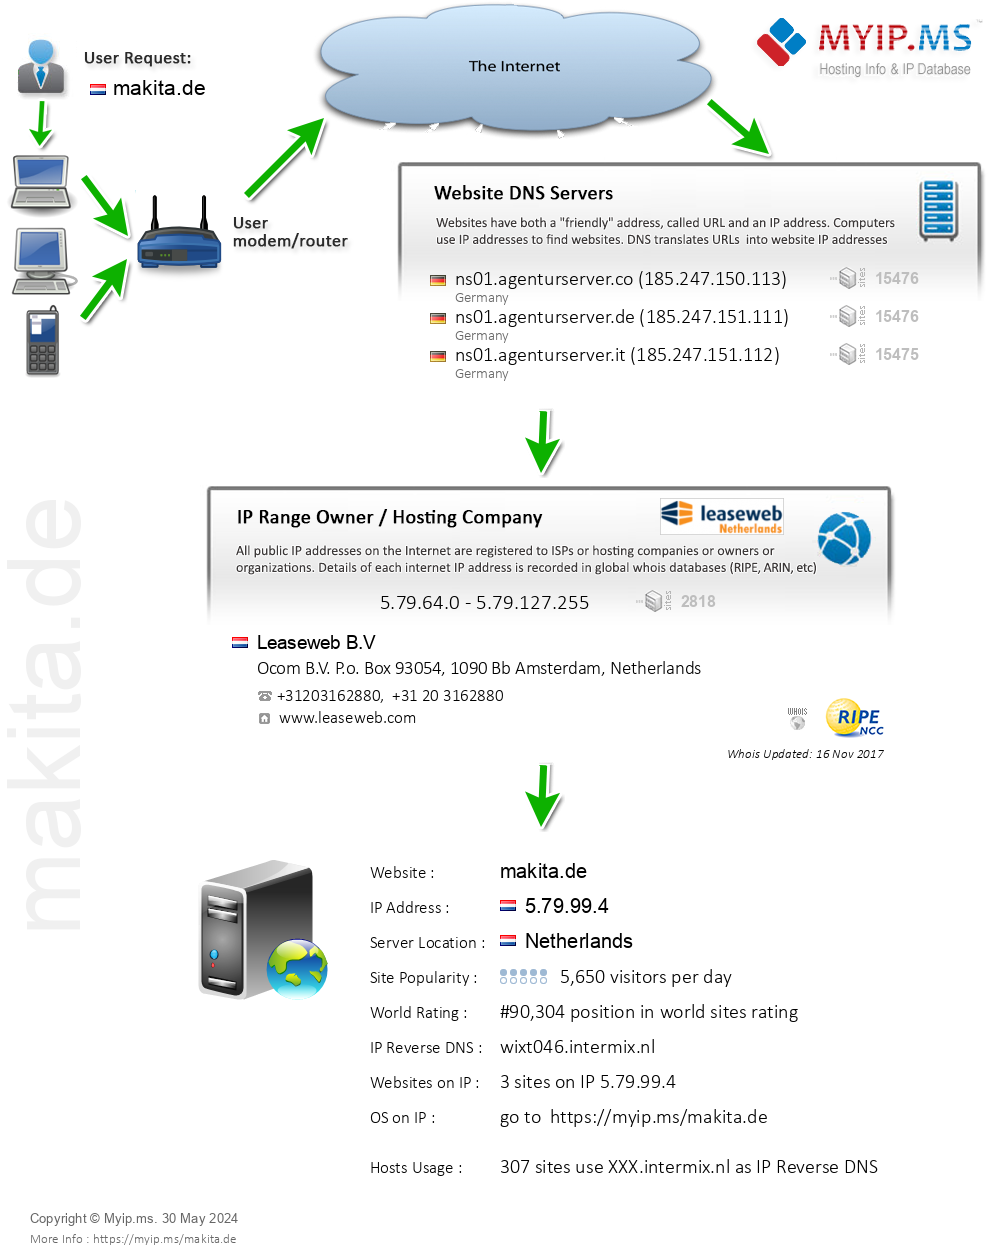 Makita.de - Website Hosting Visual IP Diagram